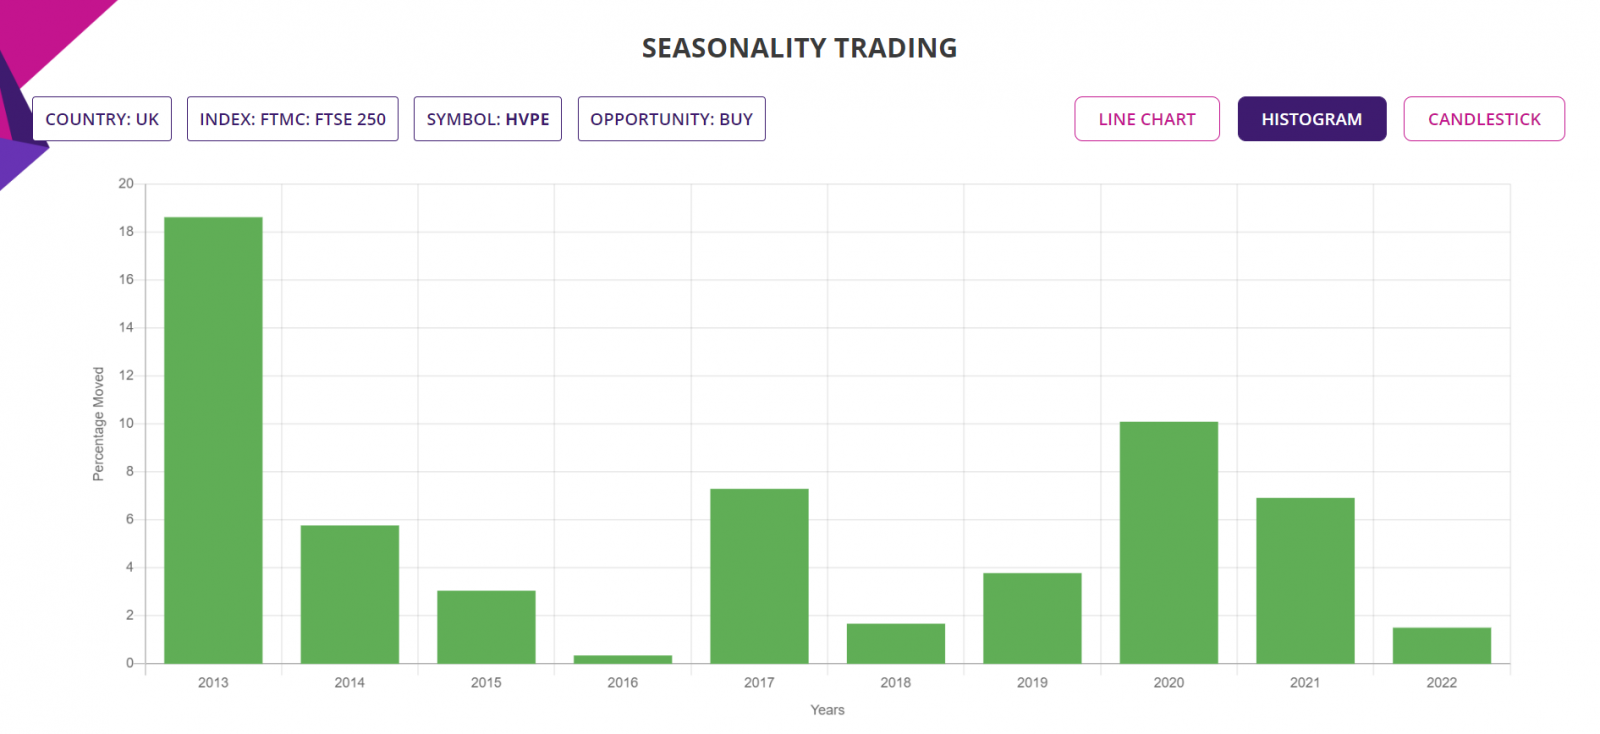 Seasonality trading strategy, detailed report, Histogram, Stock in focus, week 48